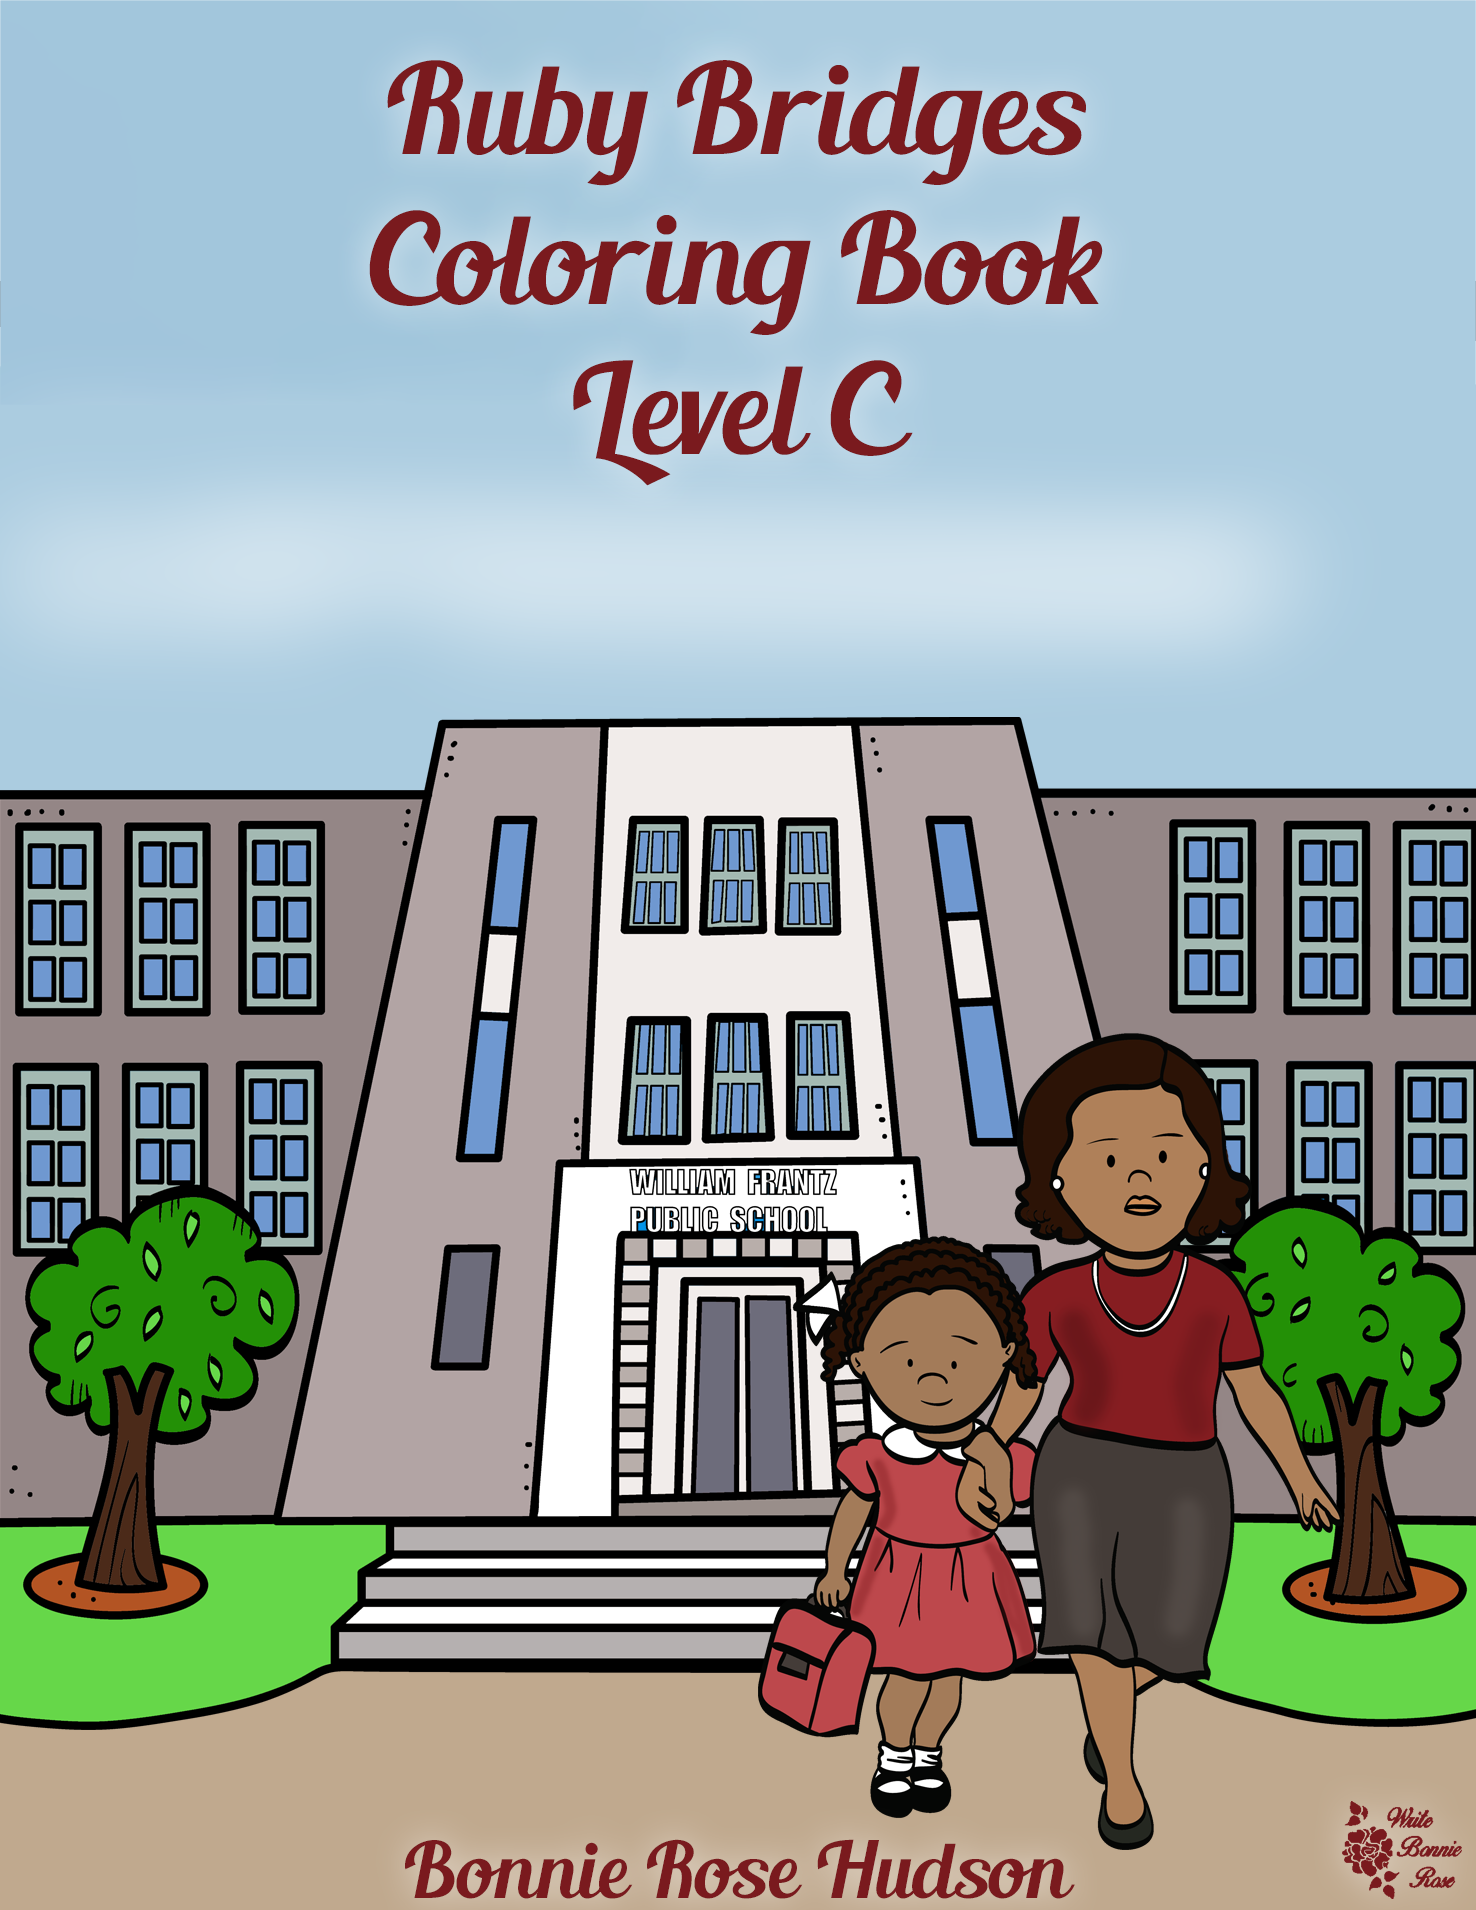 Ruby bridges coloring book